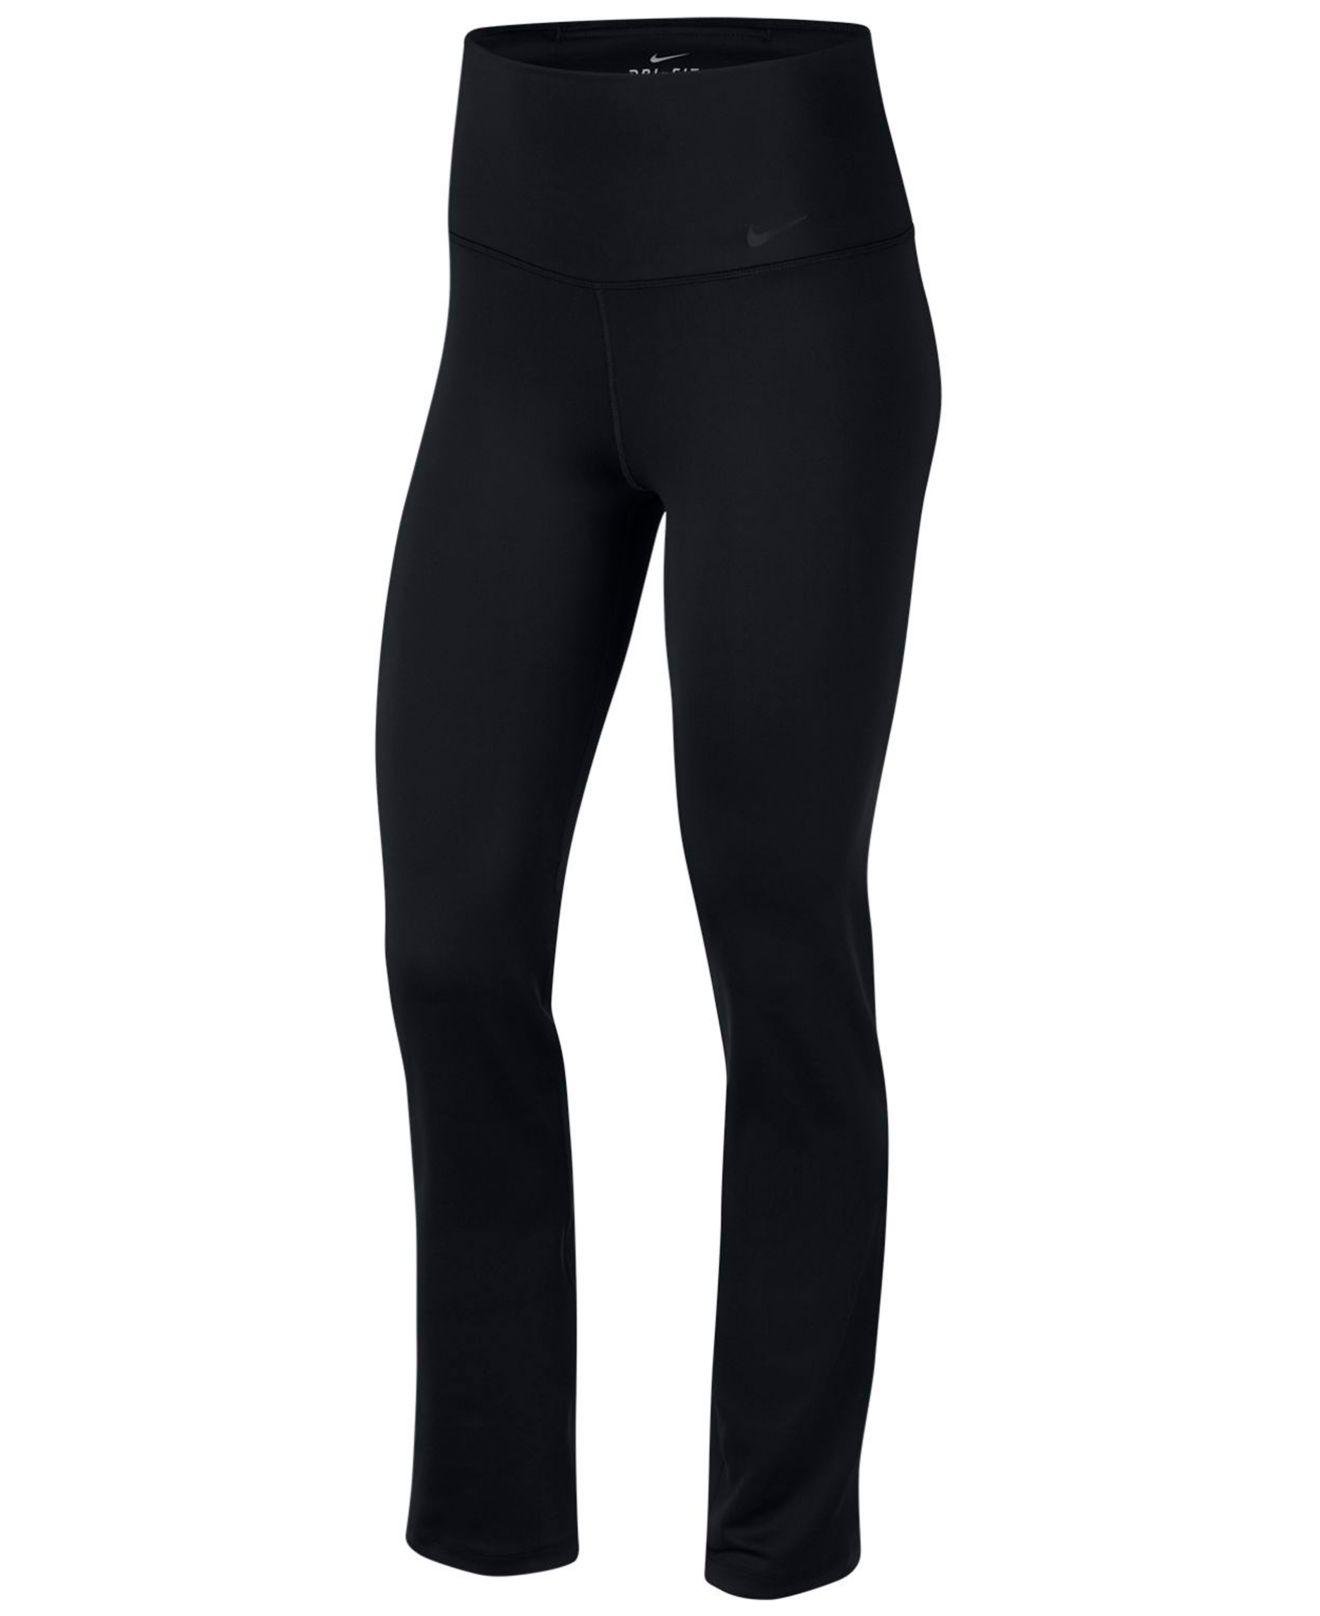 Nike Power Yoga Training Trousers in Black